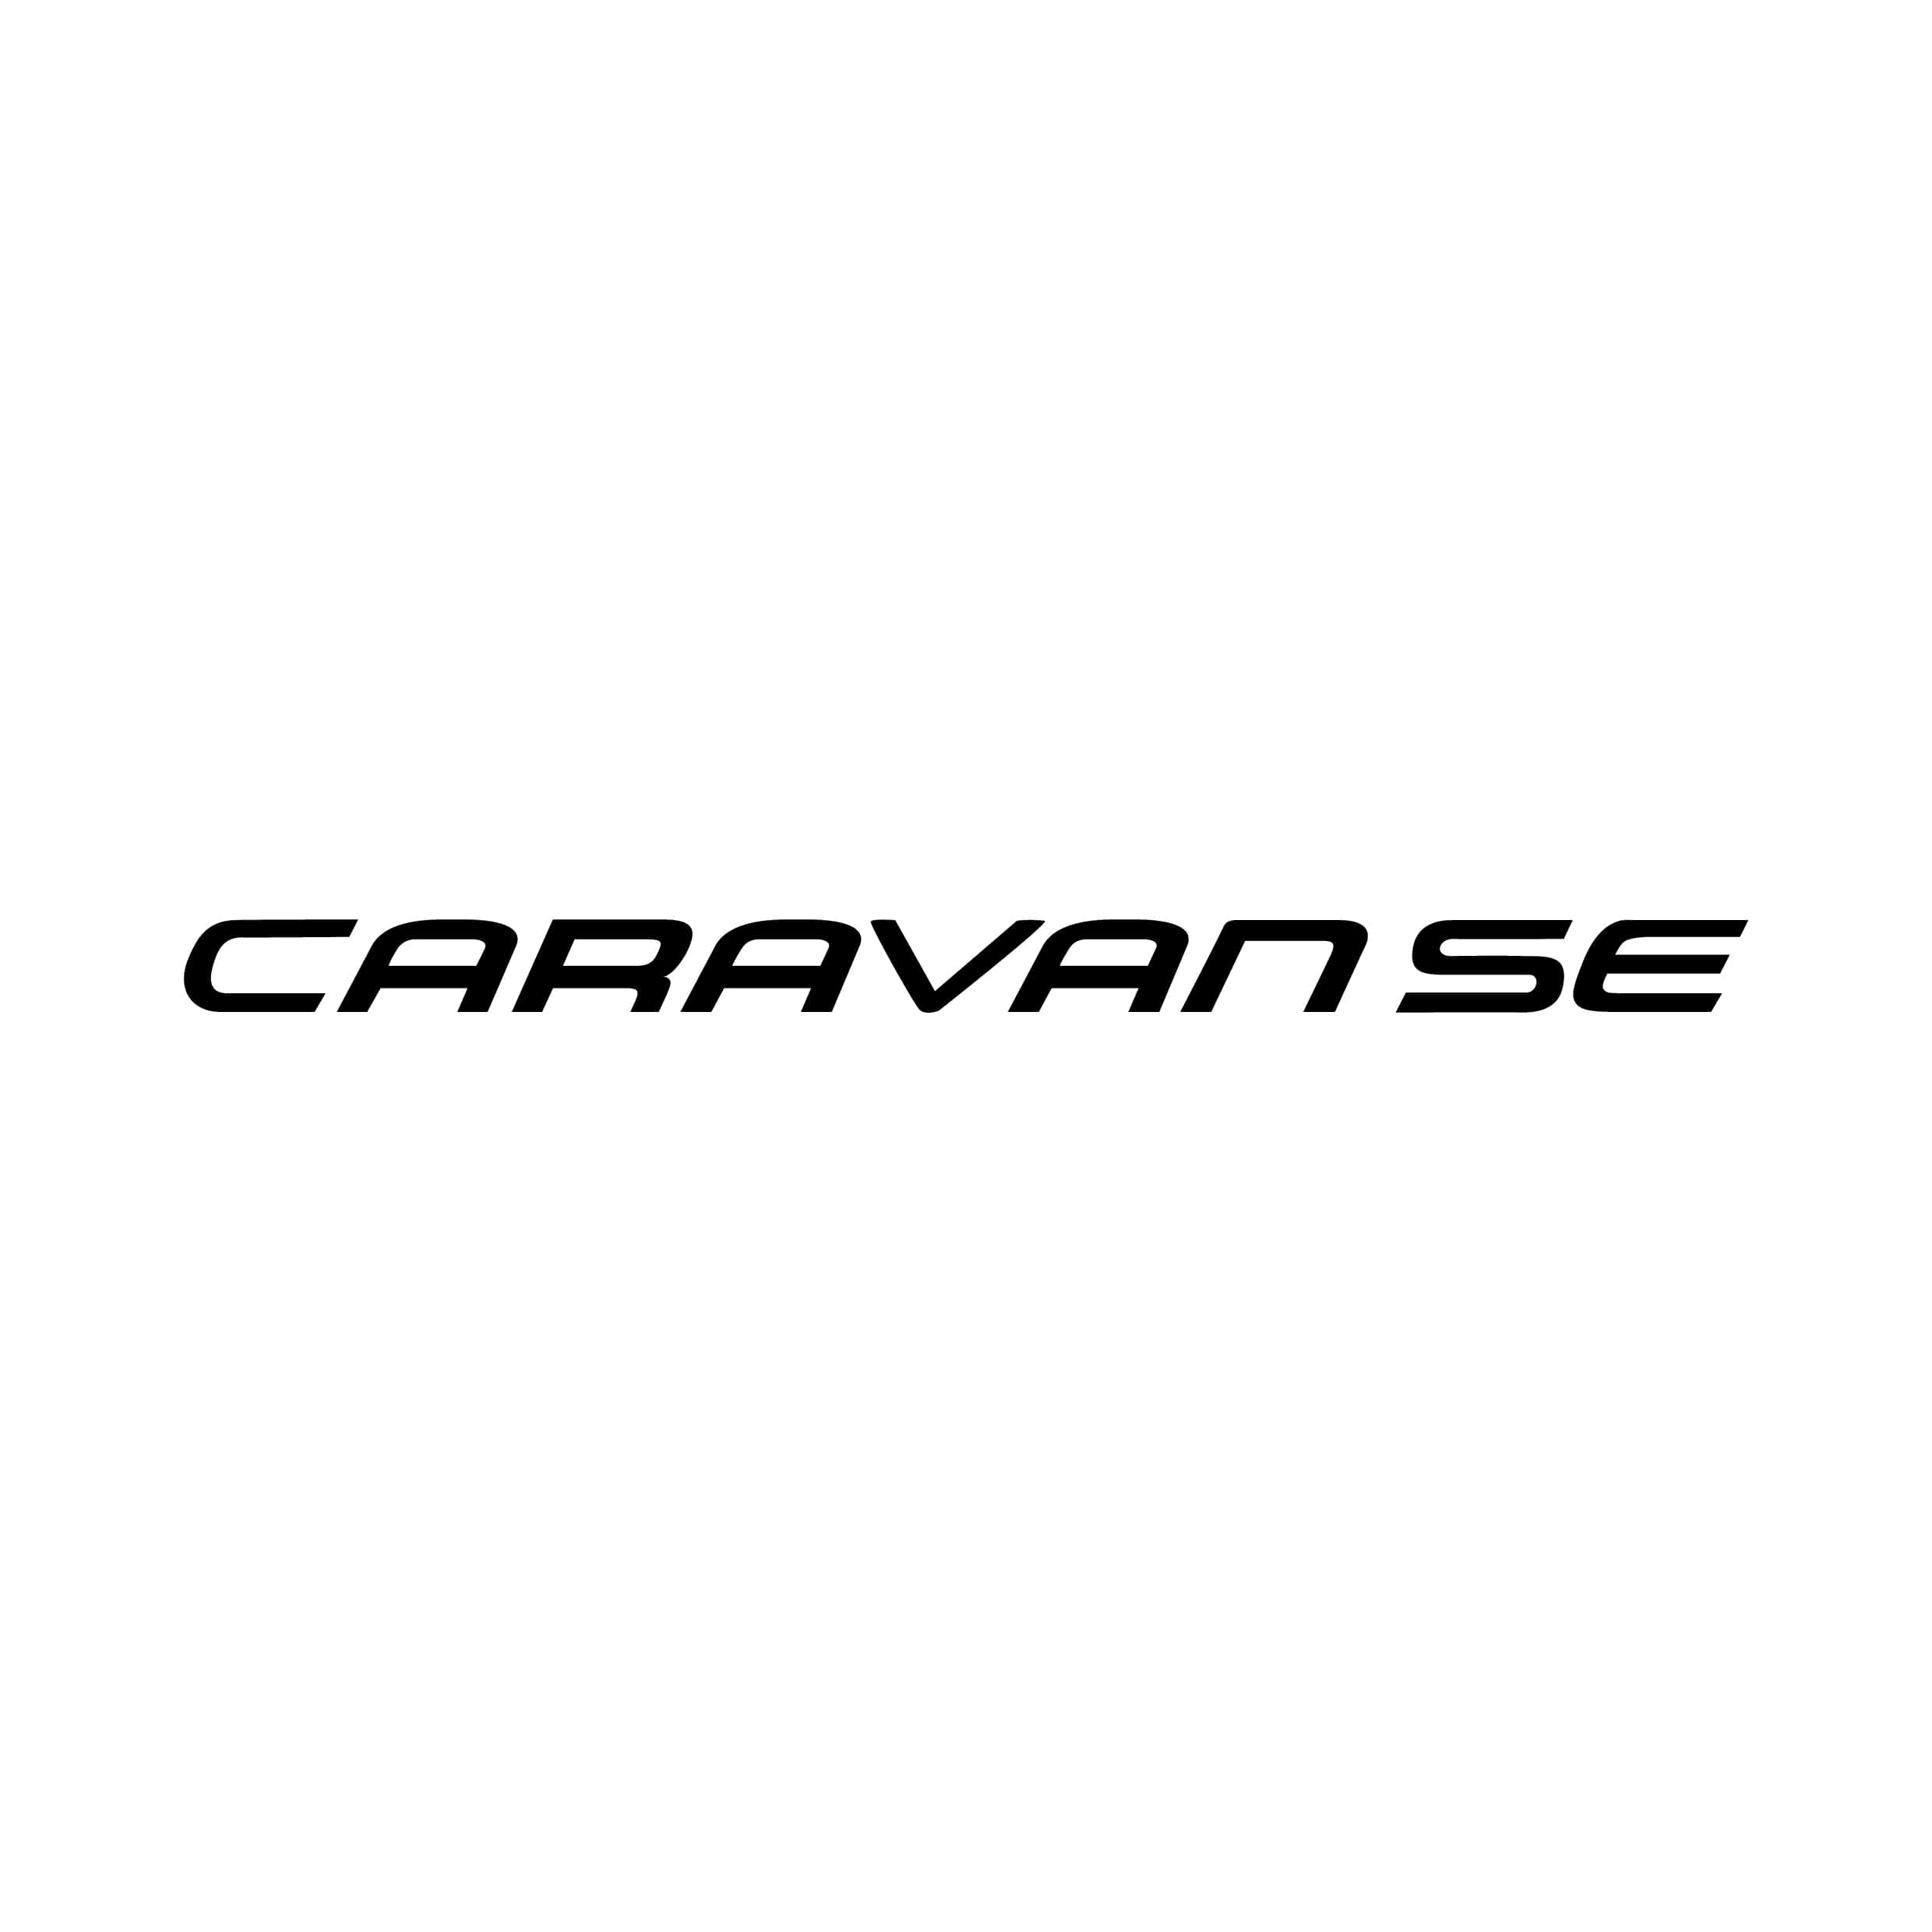 stickers-chrysler-caravan-se-ref29-autocollant-voiture-sticker-auto-autocollants-decals-sponsors-racing-tuning-sport-logo-min